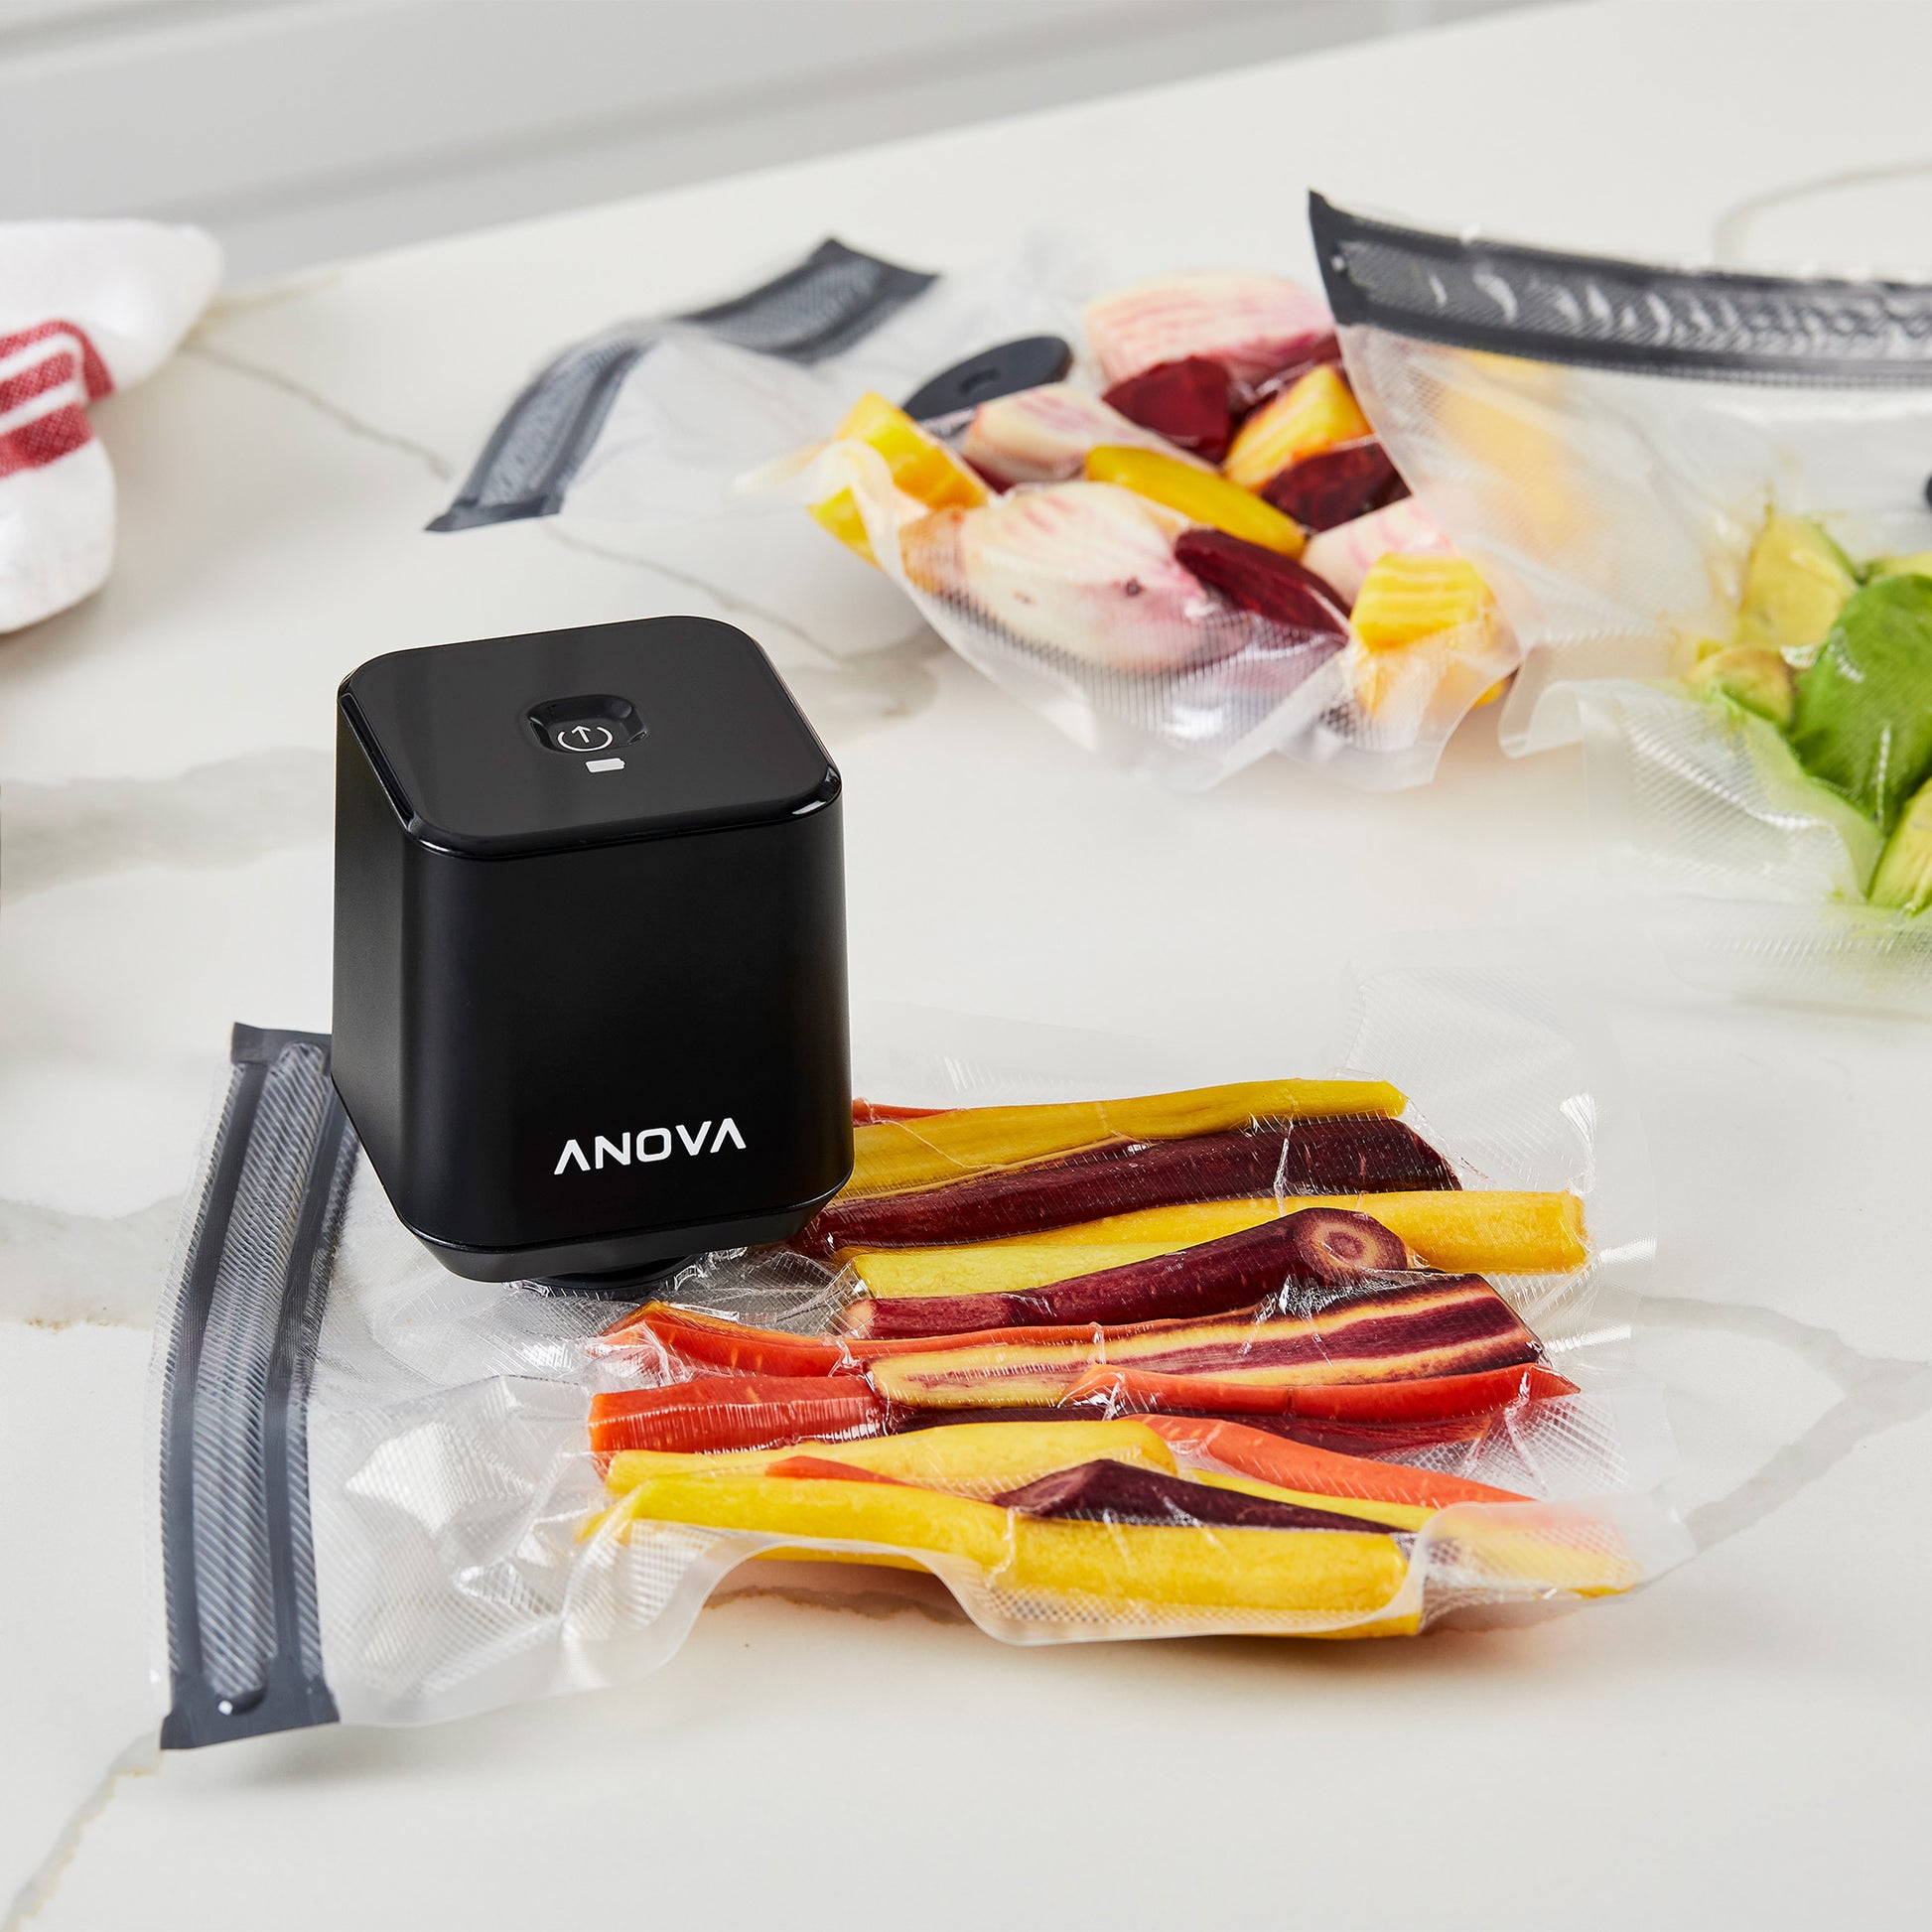 Anova Precision™ Vacuum Sealer Bags – Anova Culinary